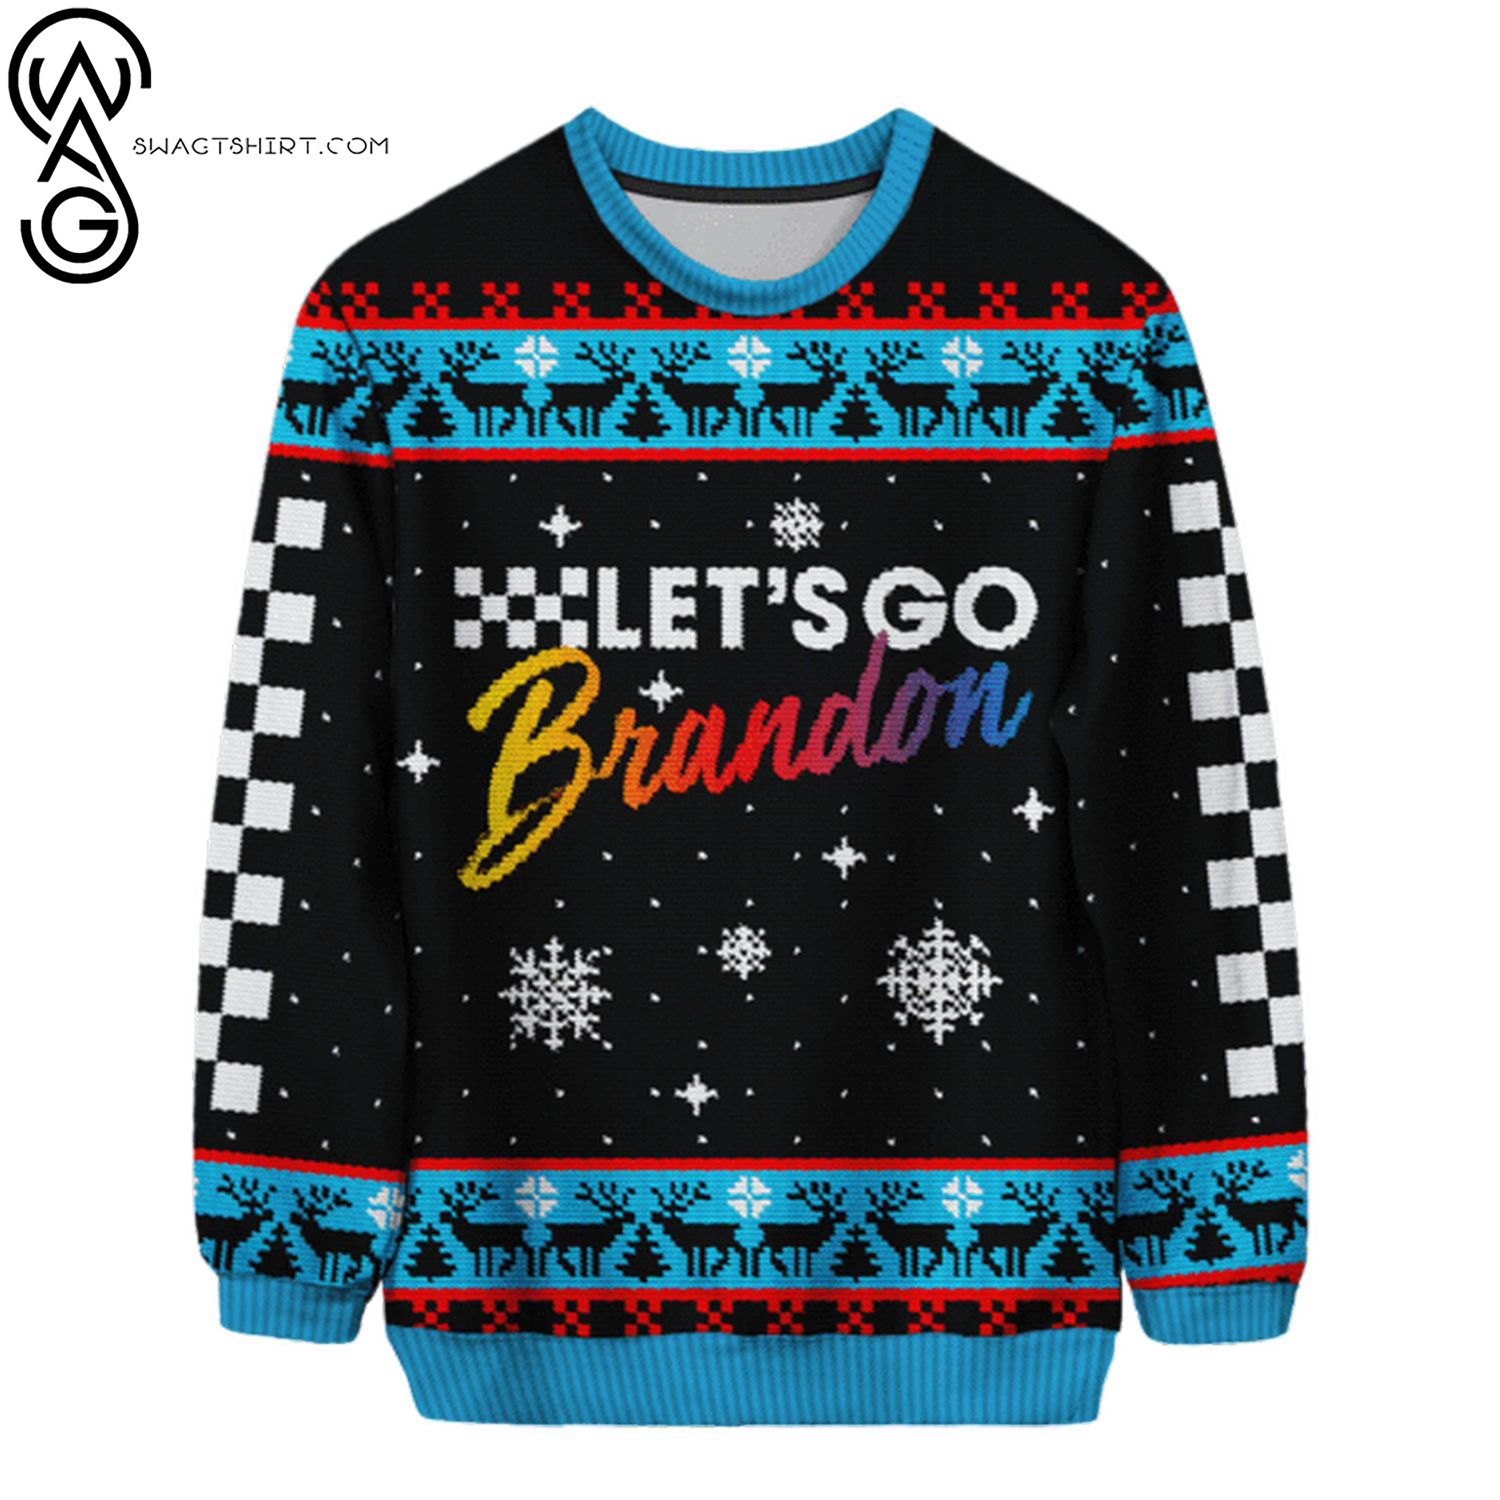 Let's go brandon full printing ugly christmas sweater